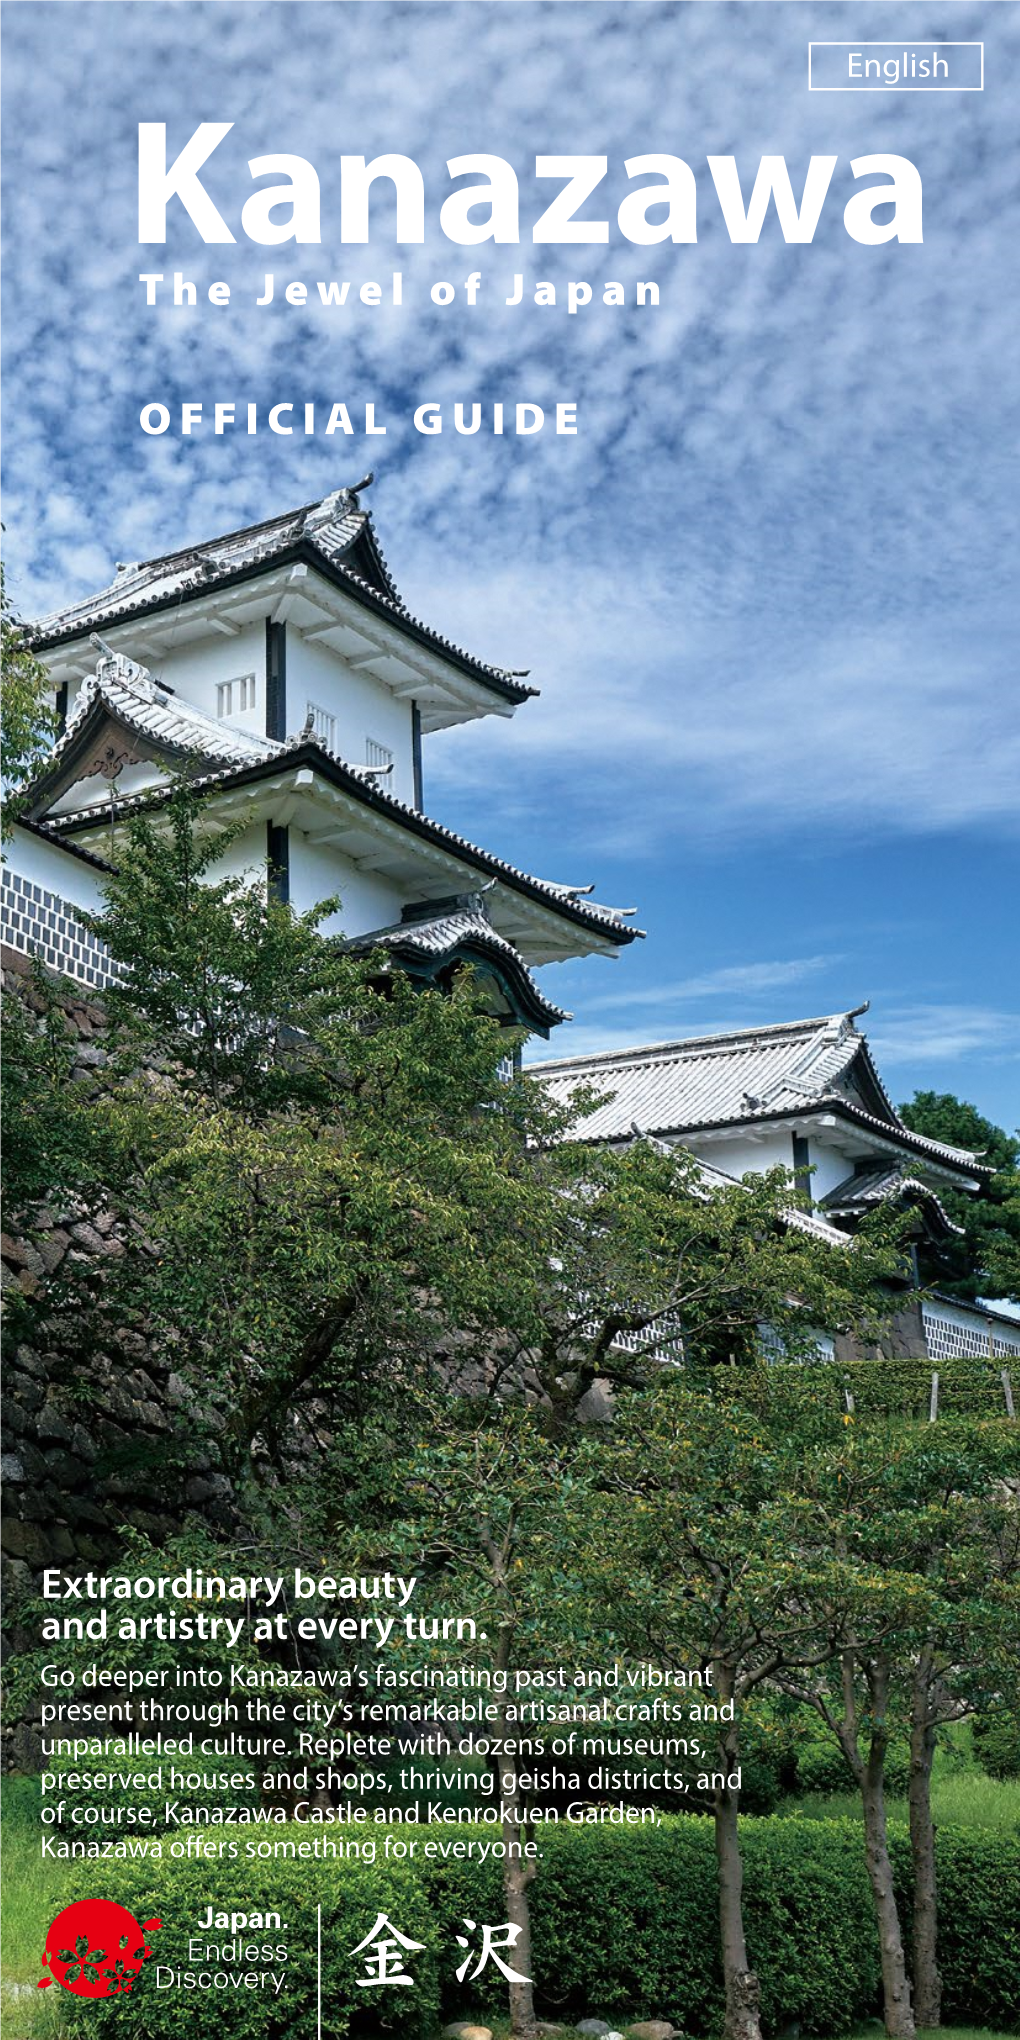 Kanazawa Castle Town